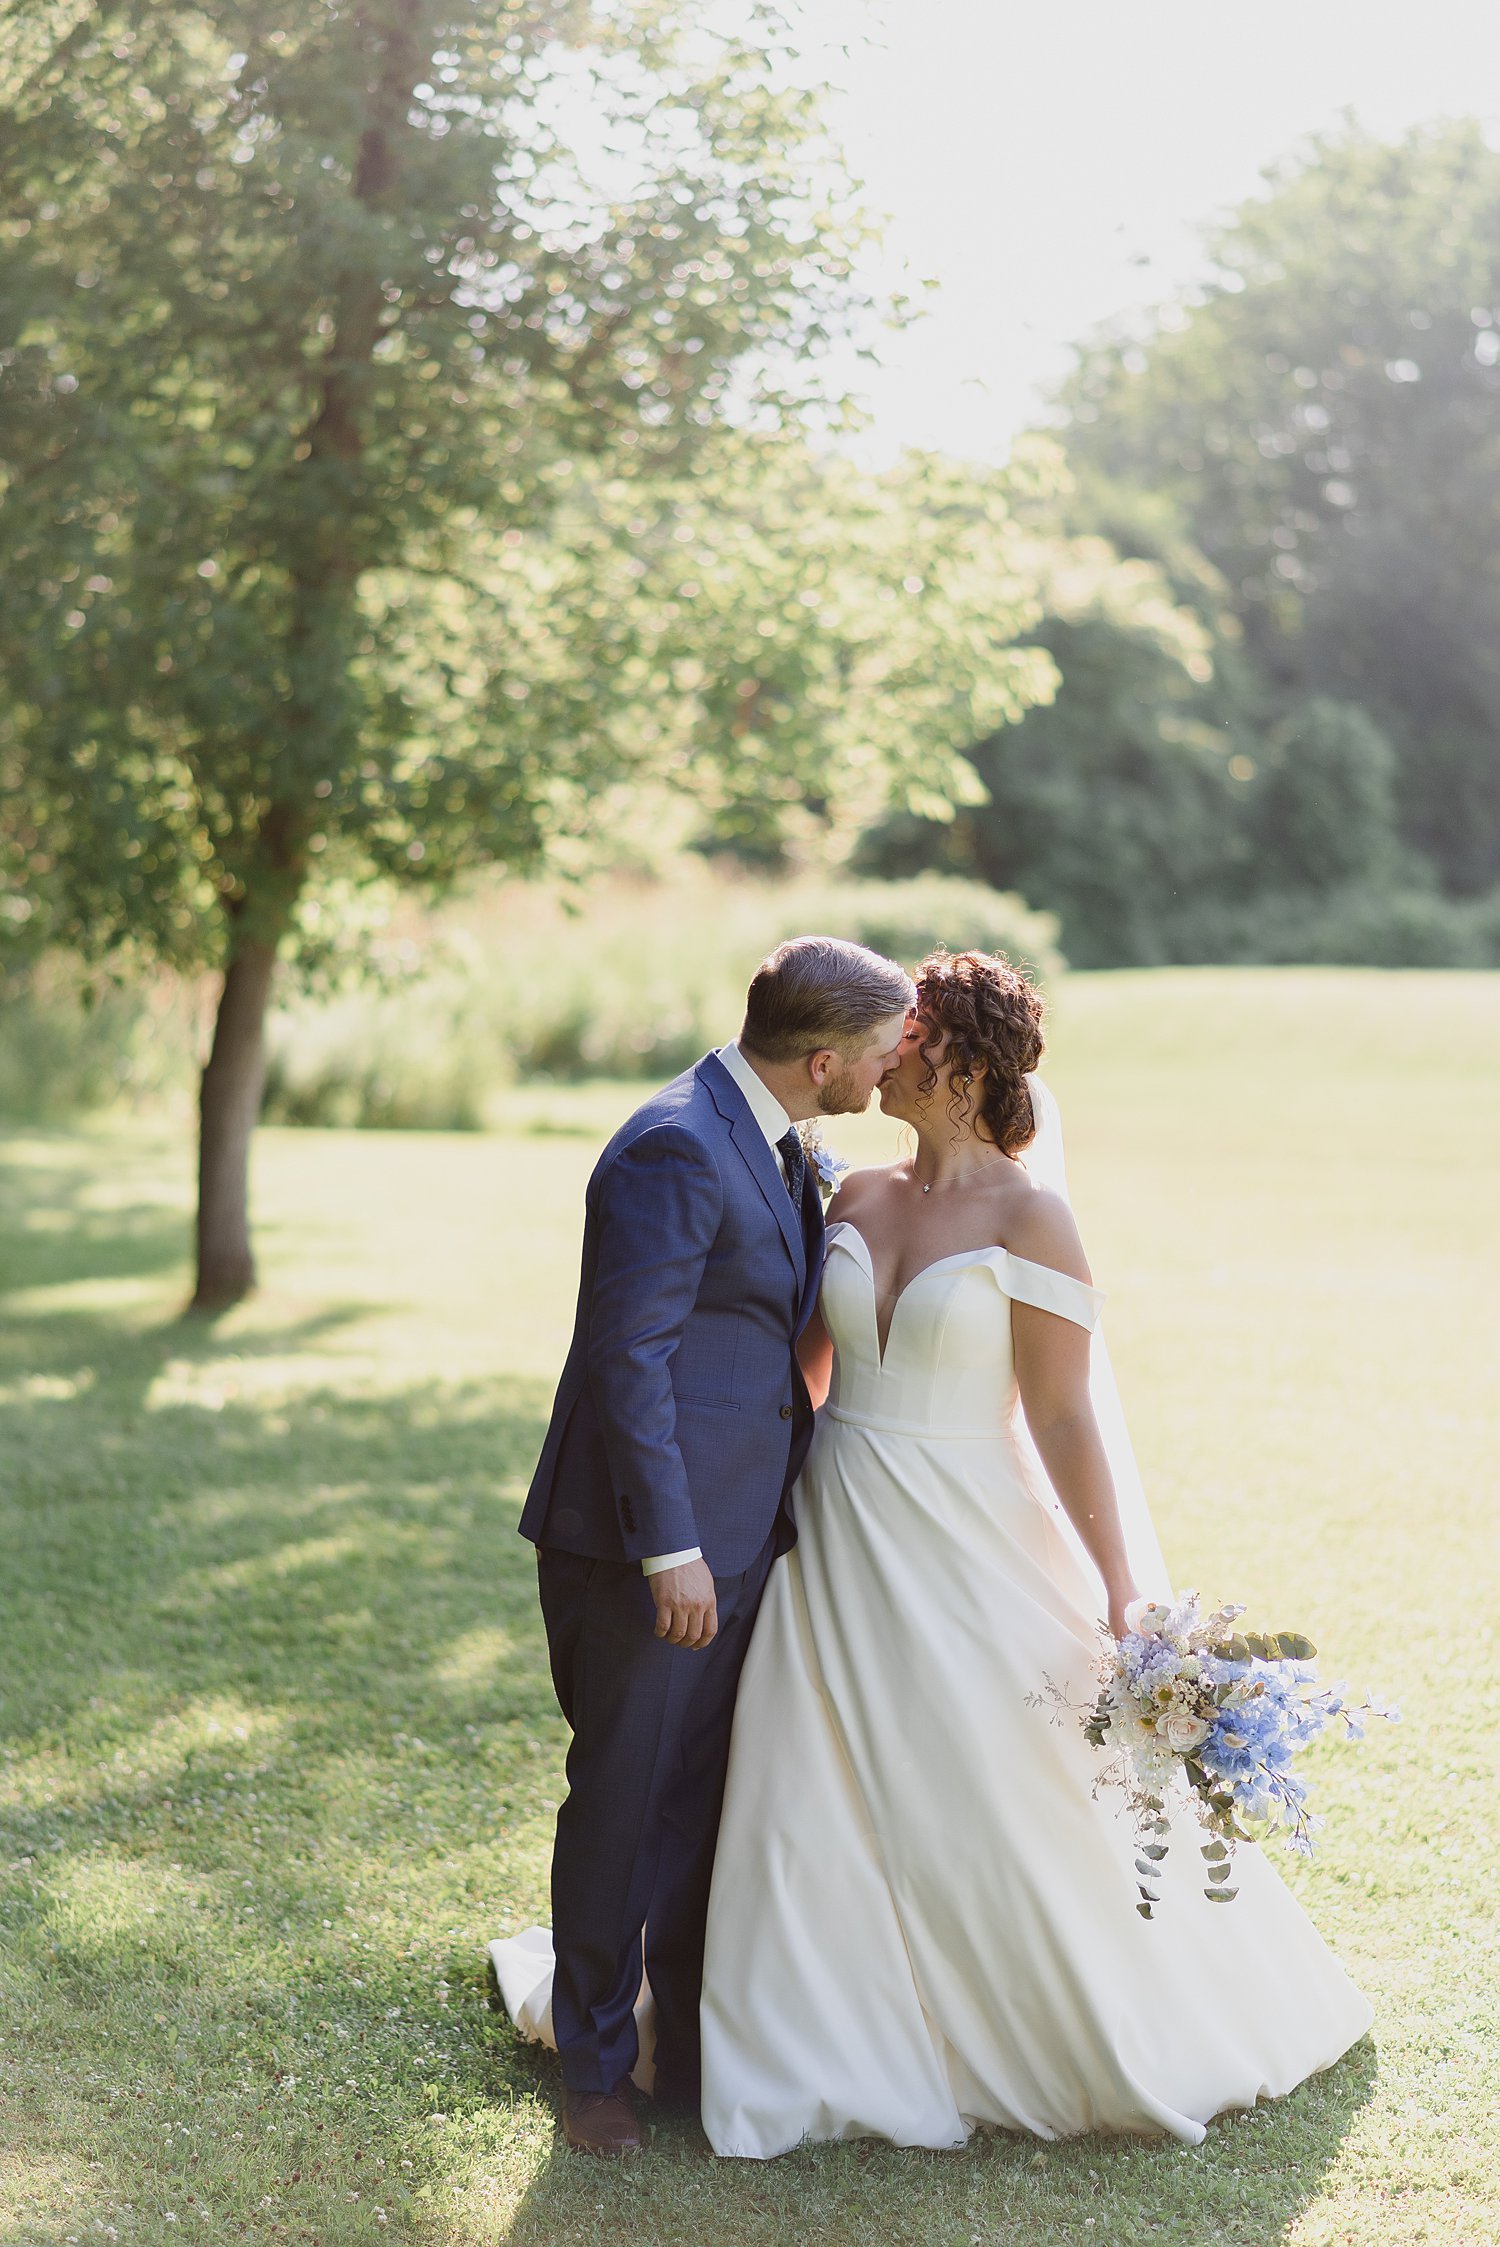 Elegant Summer Backyard Tented Wedding in Sydenham, Ontario | Prince Edward County Wedding Photographer | Holly McMurter Photographs_0061.jpg